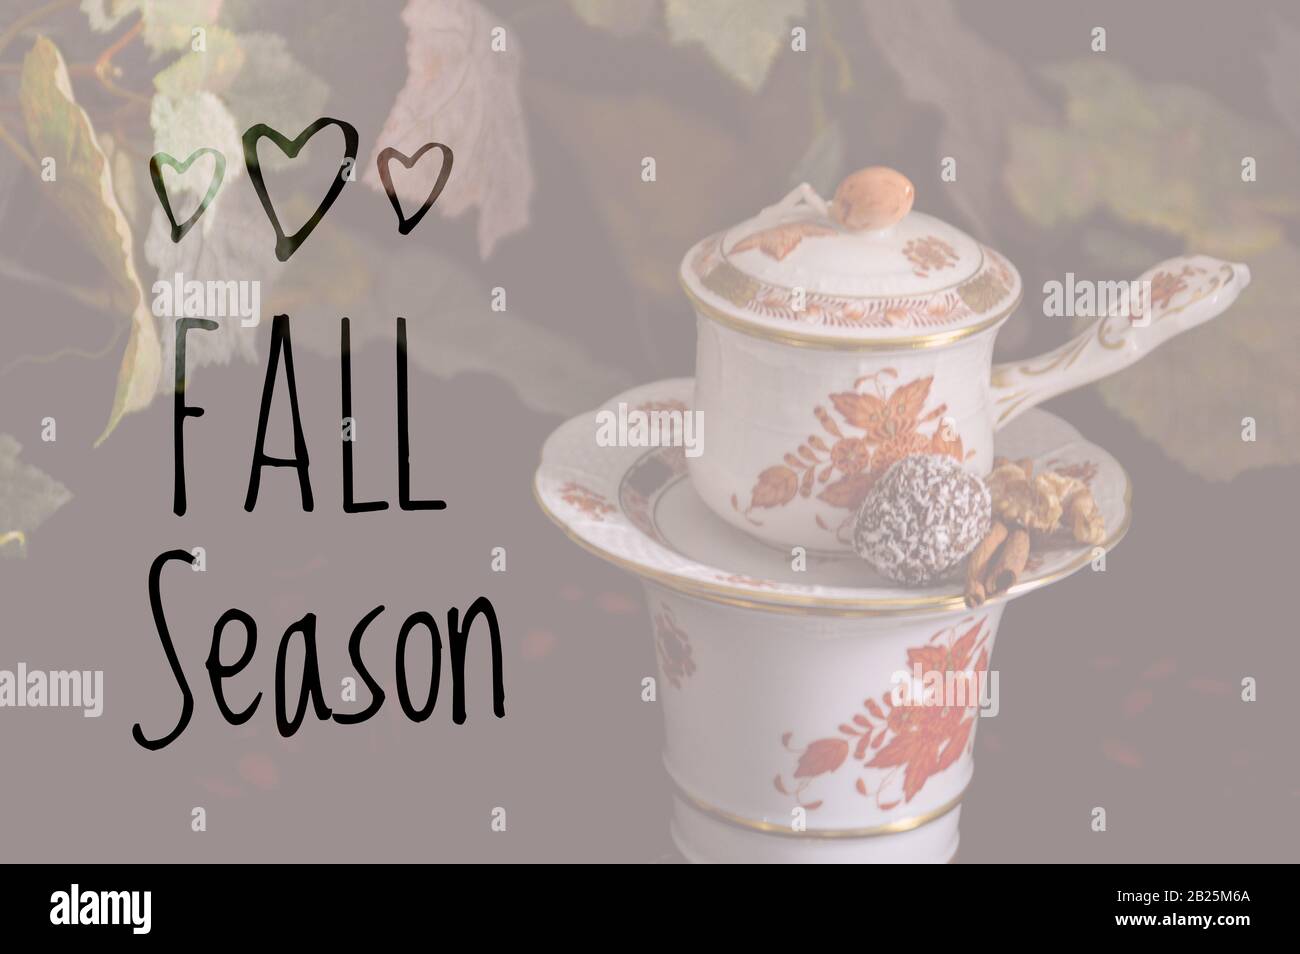 Fall Season typography rustic background Stock Photo